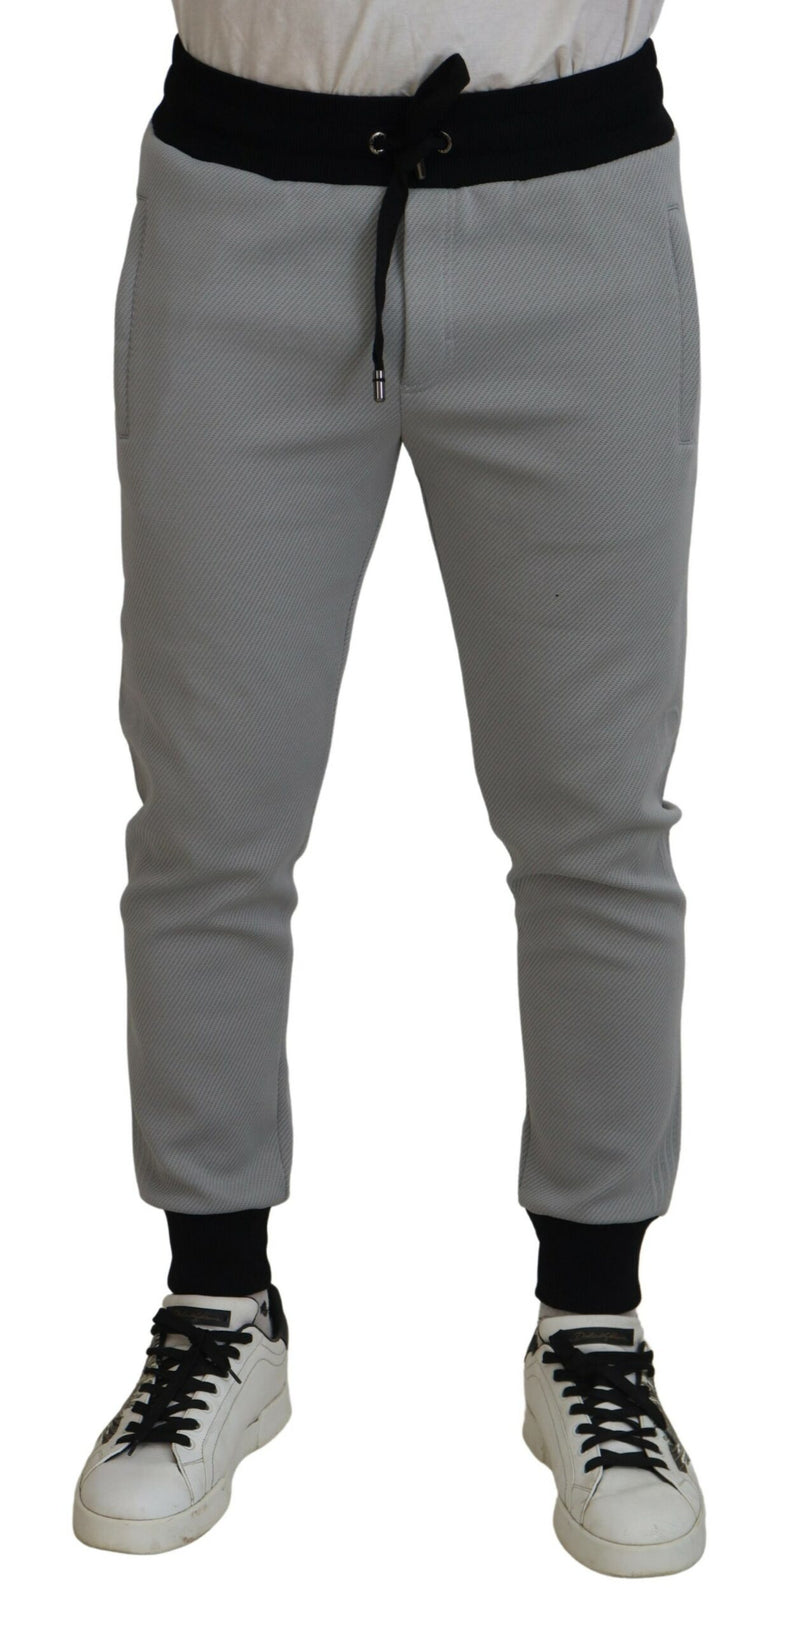 Dolce & Gabbana Elegant Grey Jogger Men's Pants